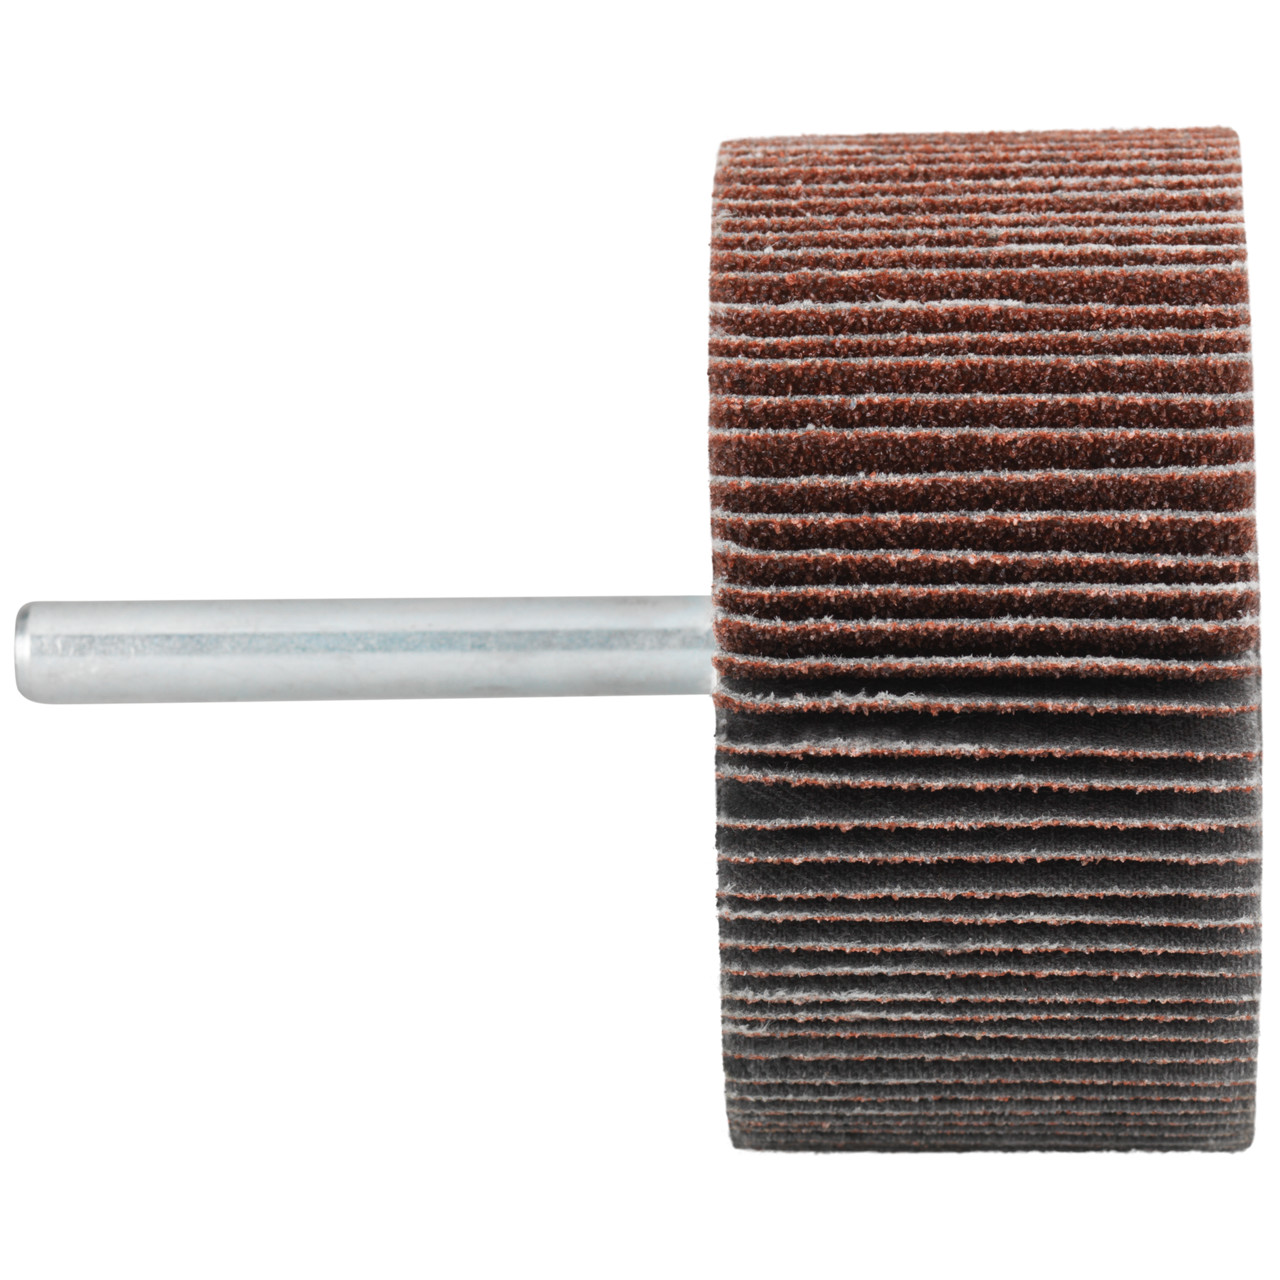 Tyrolit A-P01 C X Perni DxD 50x20 Per acciaio, acciaio inox e metalli non ferrosi, P320, forma: 52LA, Art. 816939